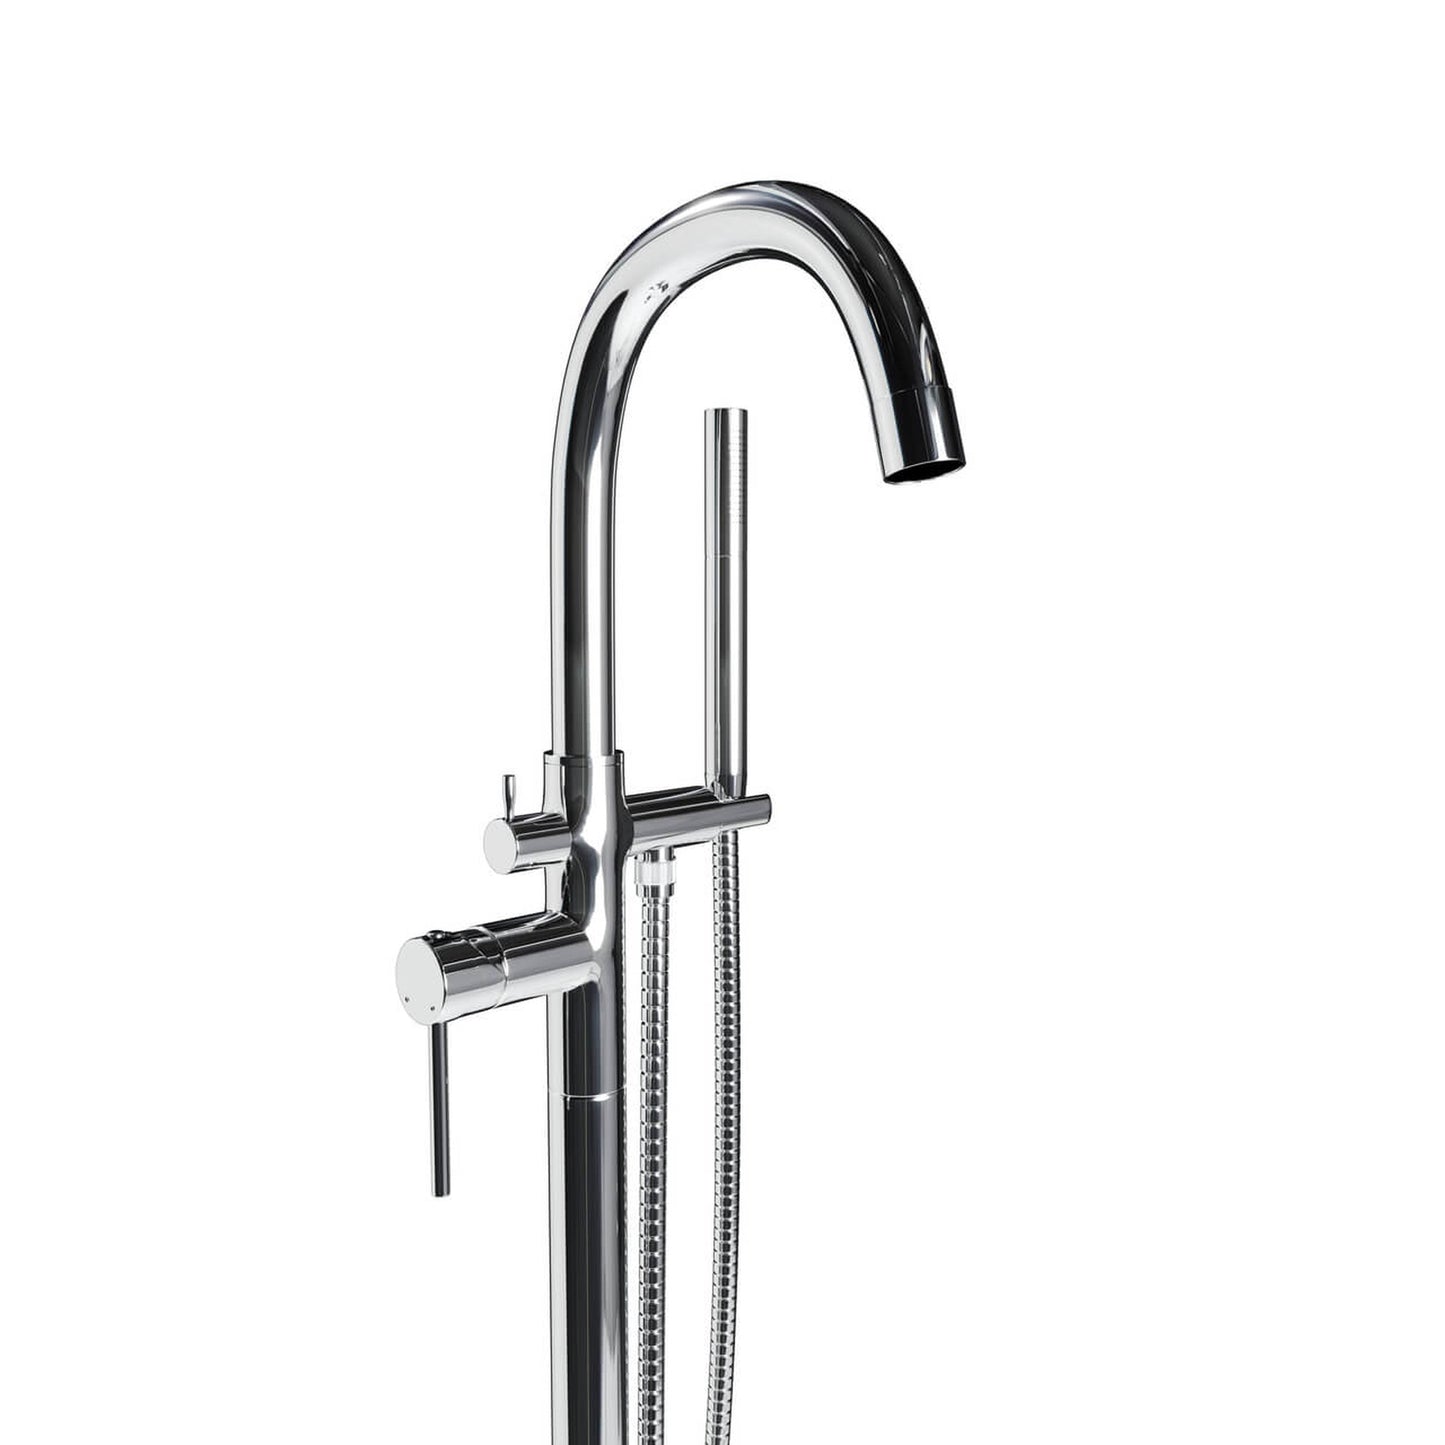 Castello USA Neptune Chrome Standard Freestanding Bathtub Filler With Shower Attachment